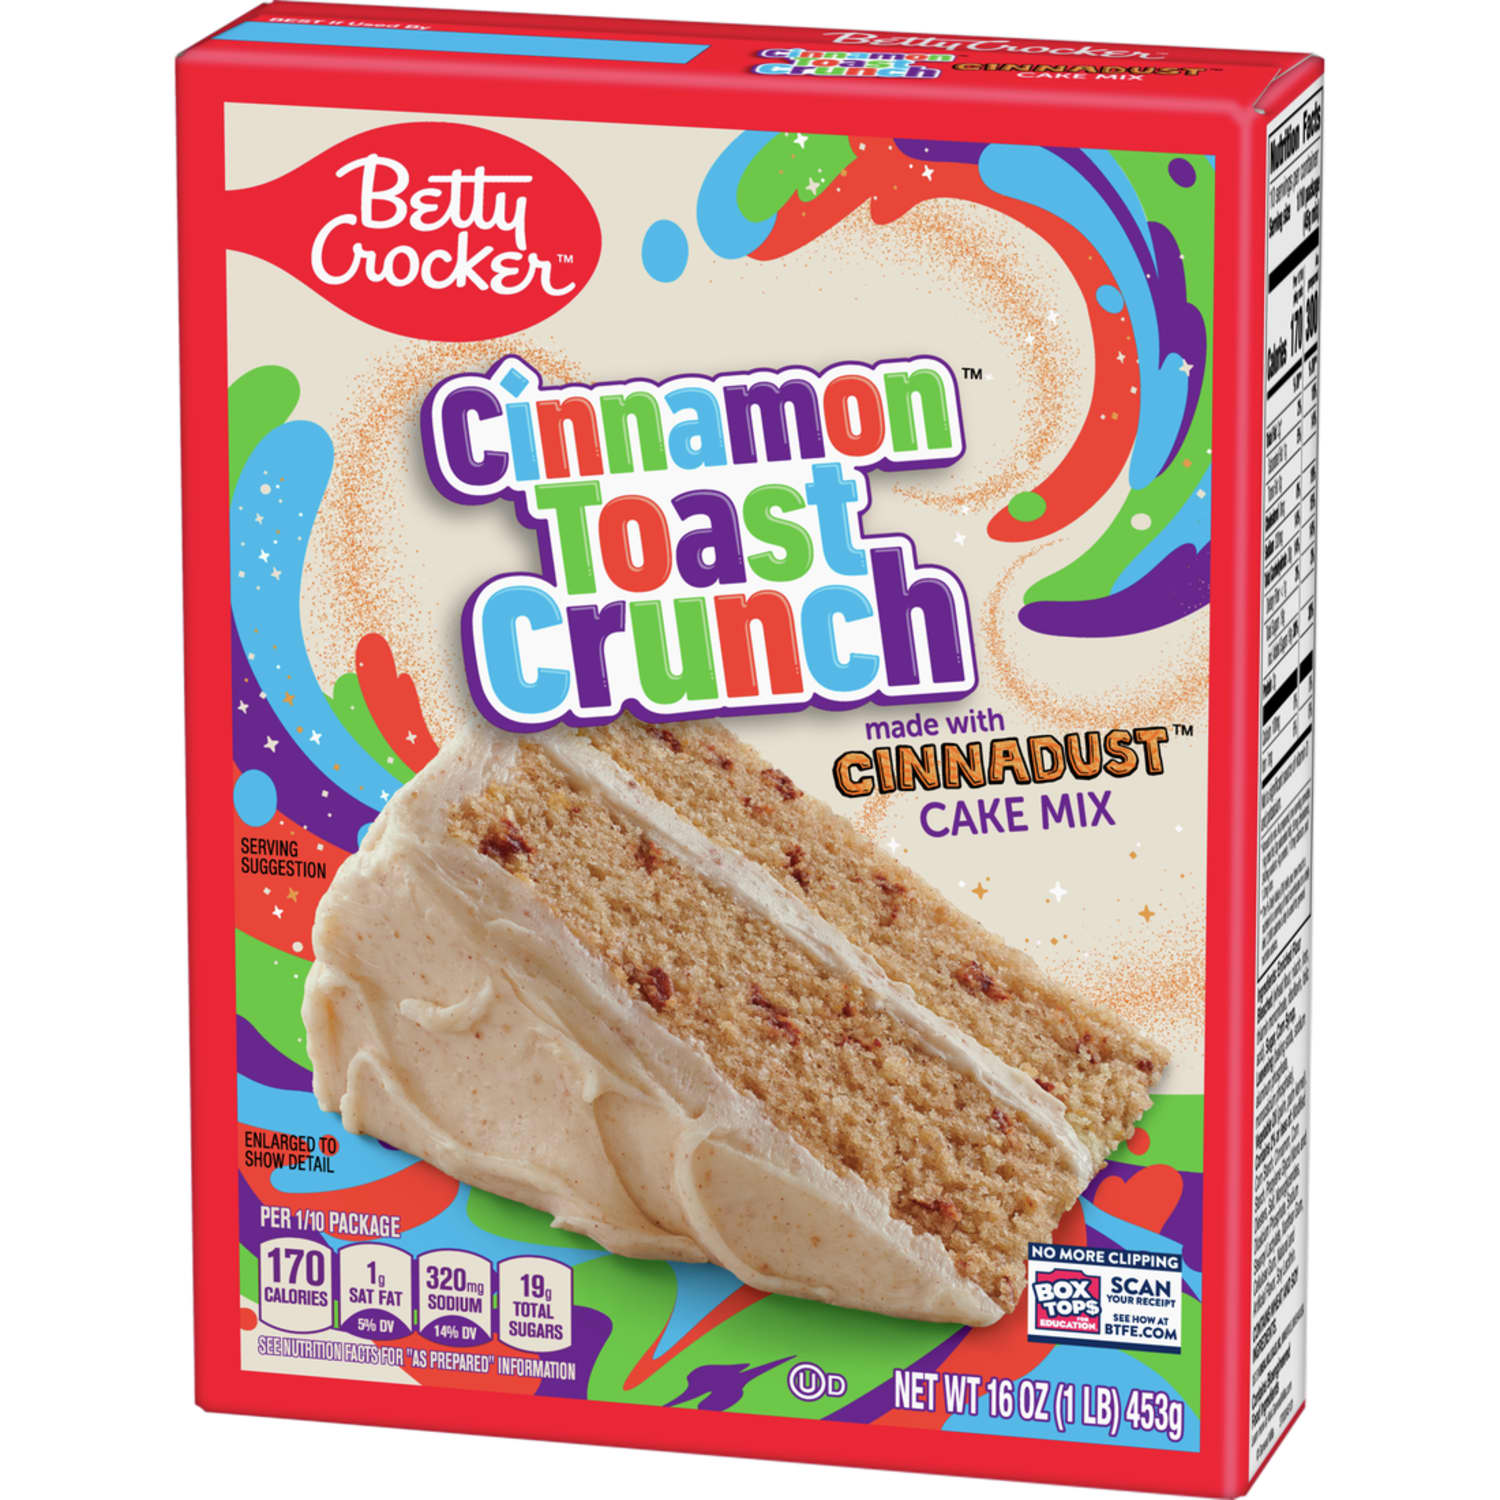 Cinnamon Toast Crunch launches seasoning blend